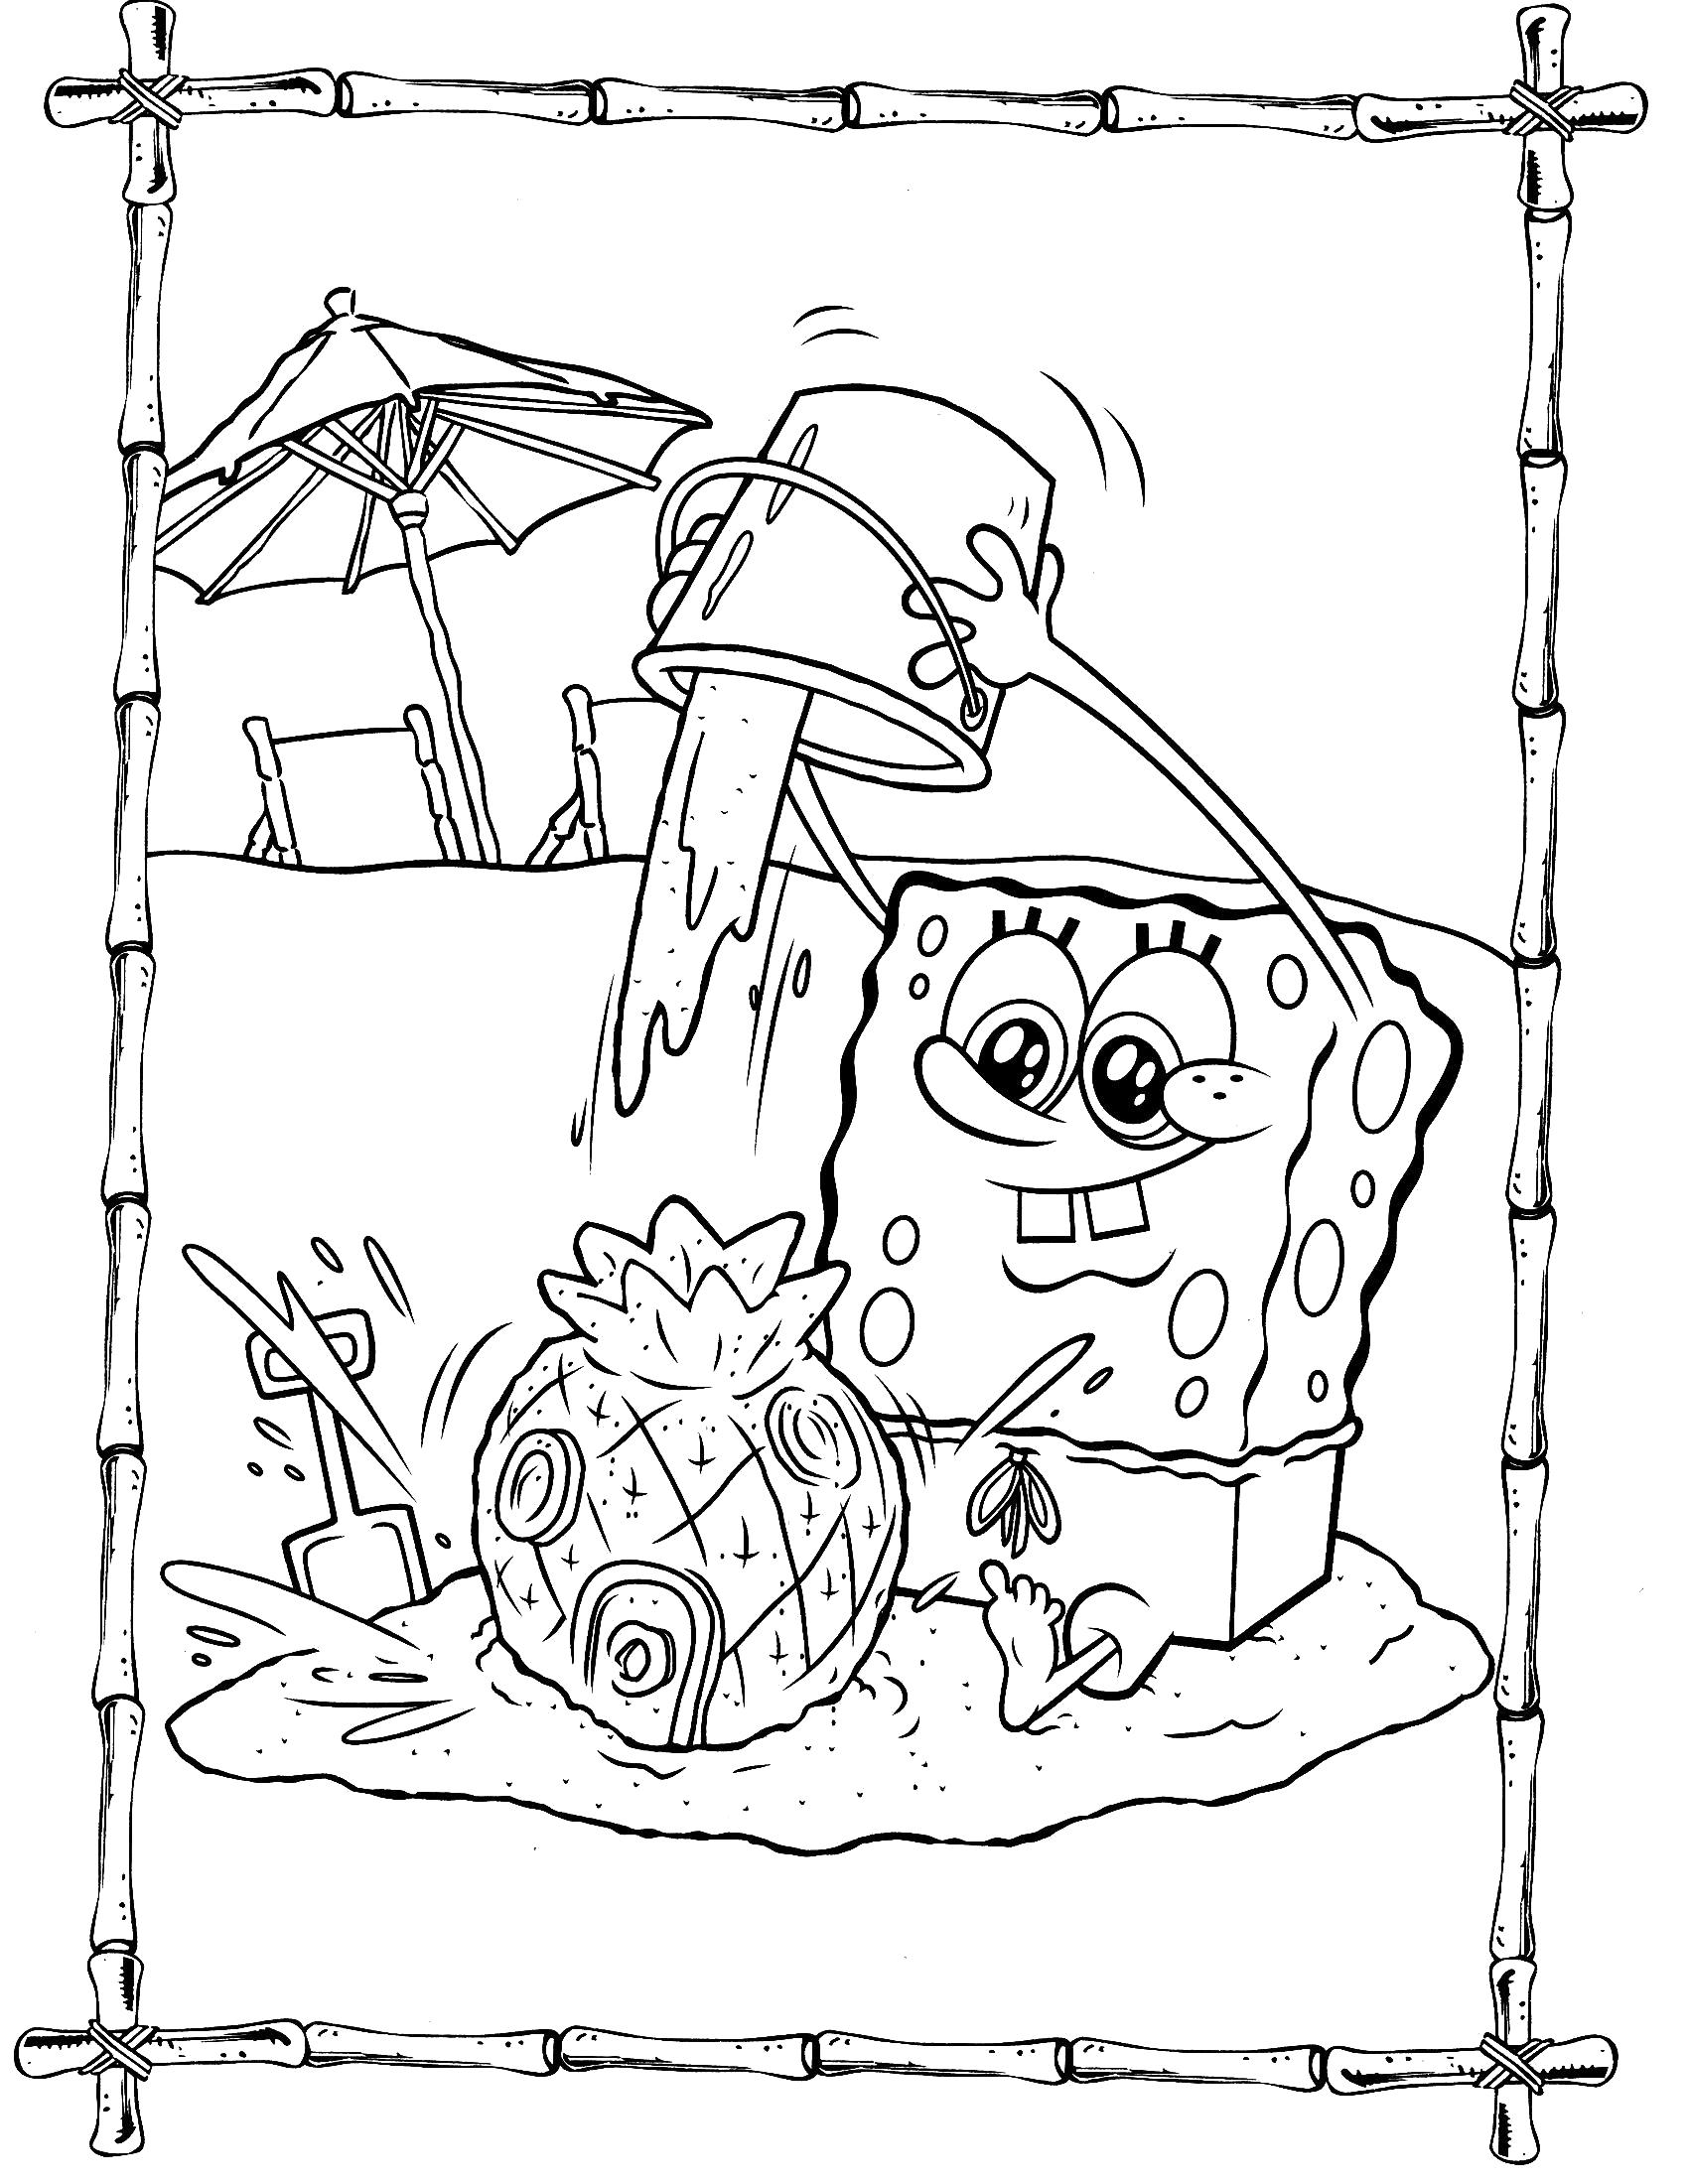 Название: Раскраска Губка Боб играет в песочнице. Категория: Спанч боб. Теги: Спанч боб.